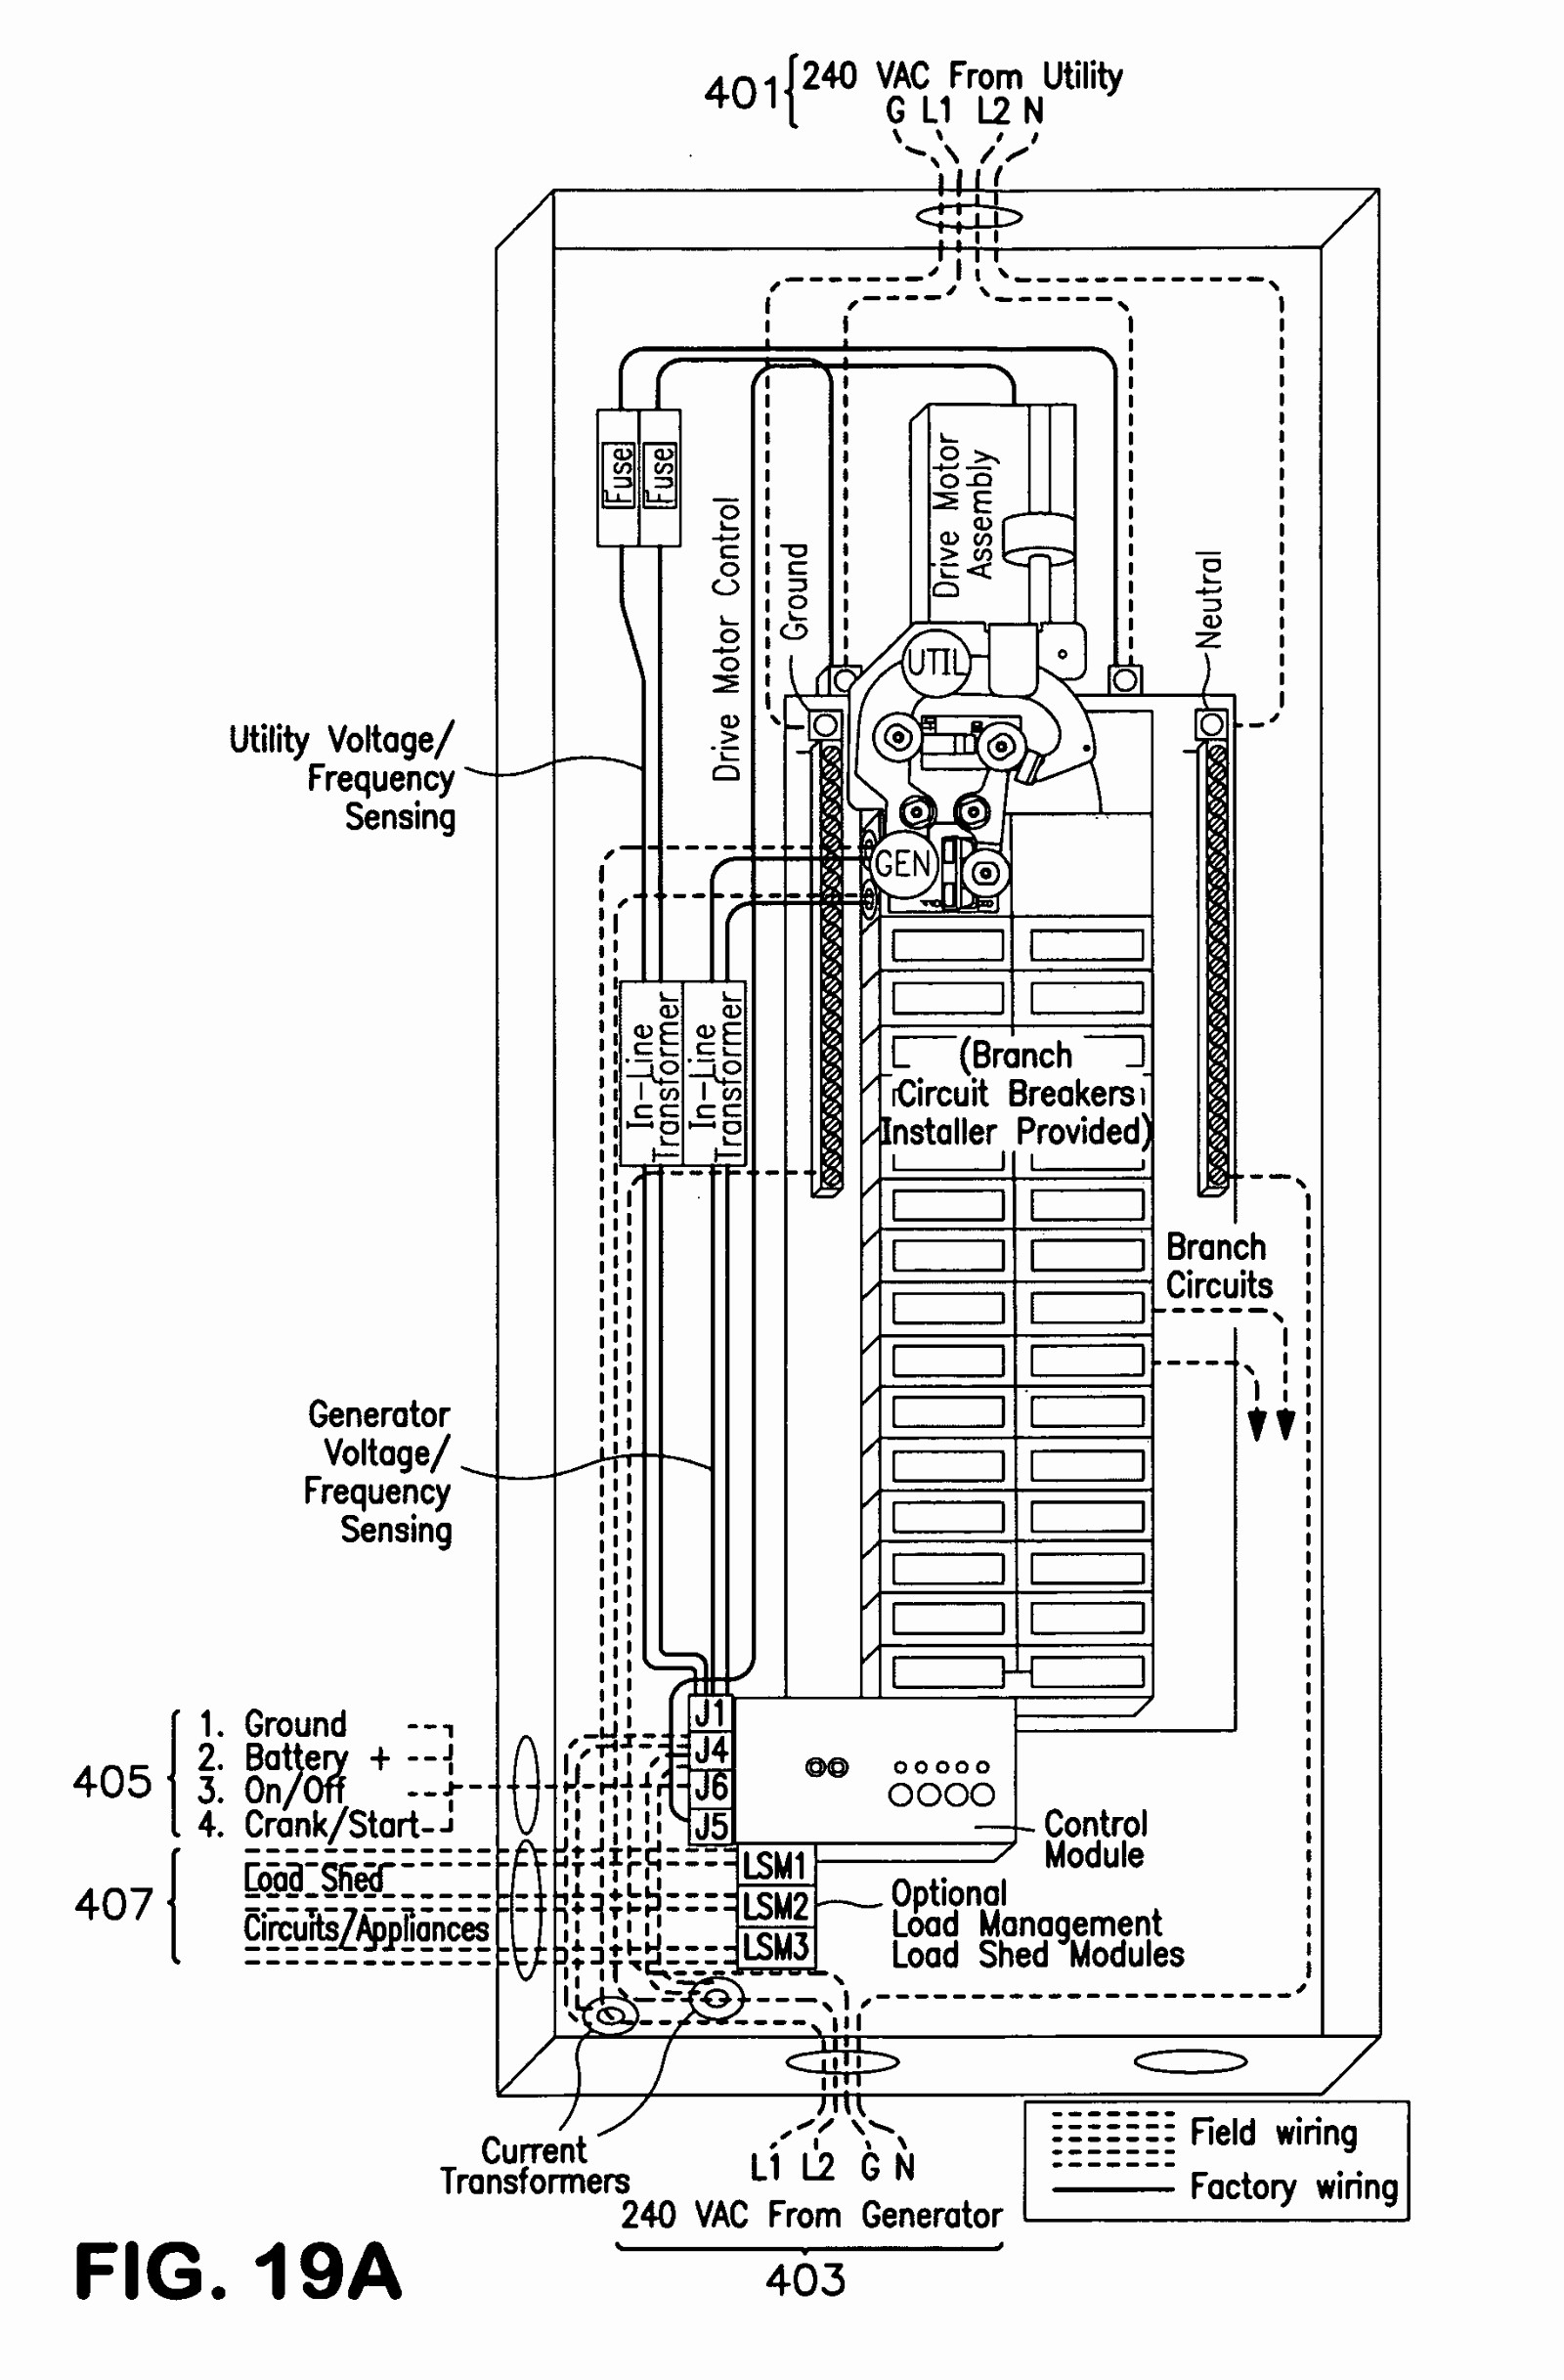 Generator Automatic Transfer Switch Wiring Diagram for Enchanting Manual Generator Transfer Switch Wiring Diagram